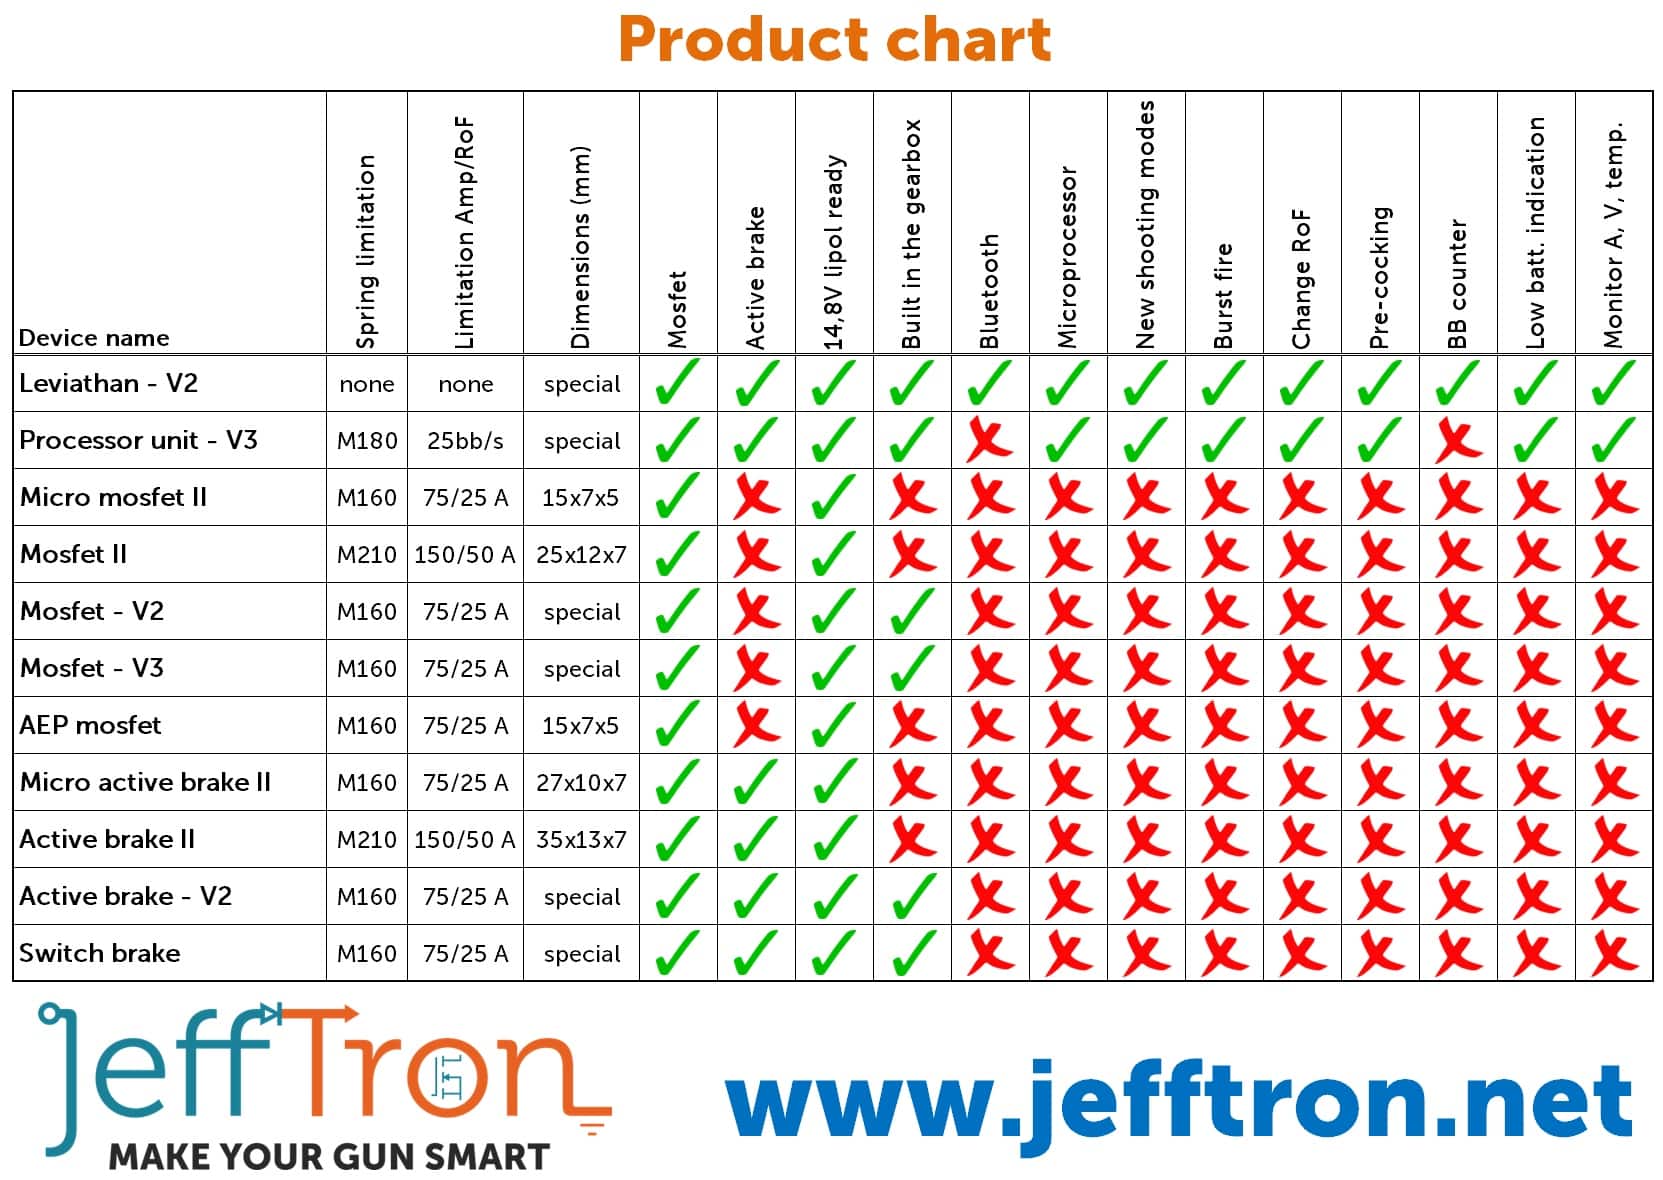 Jefftron Micro mosfet II (bare unit)